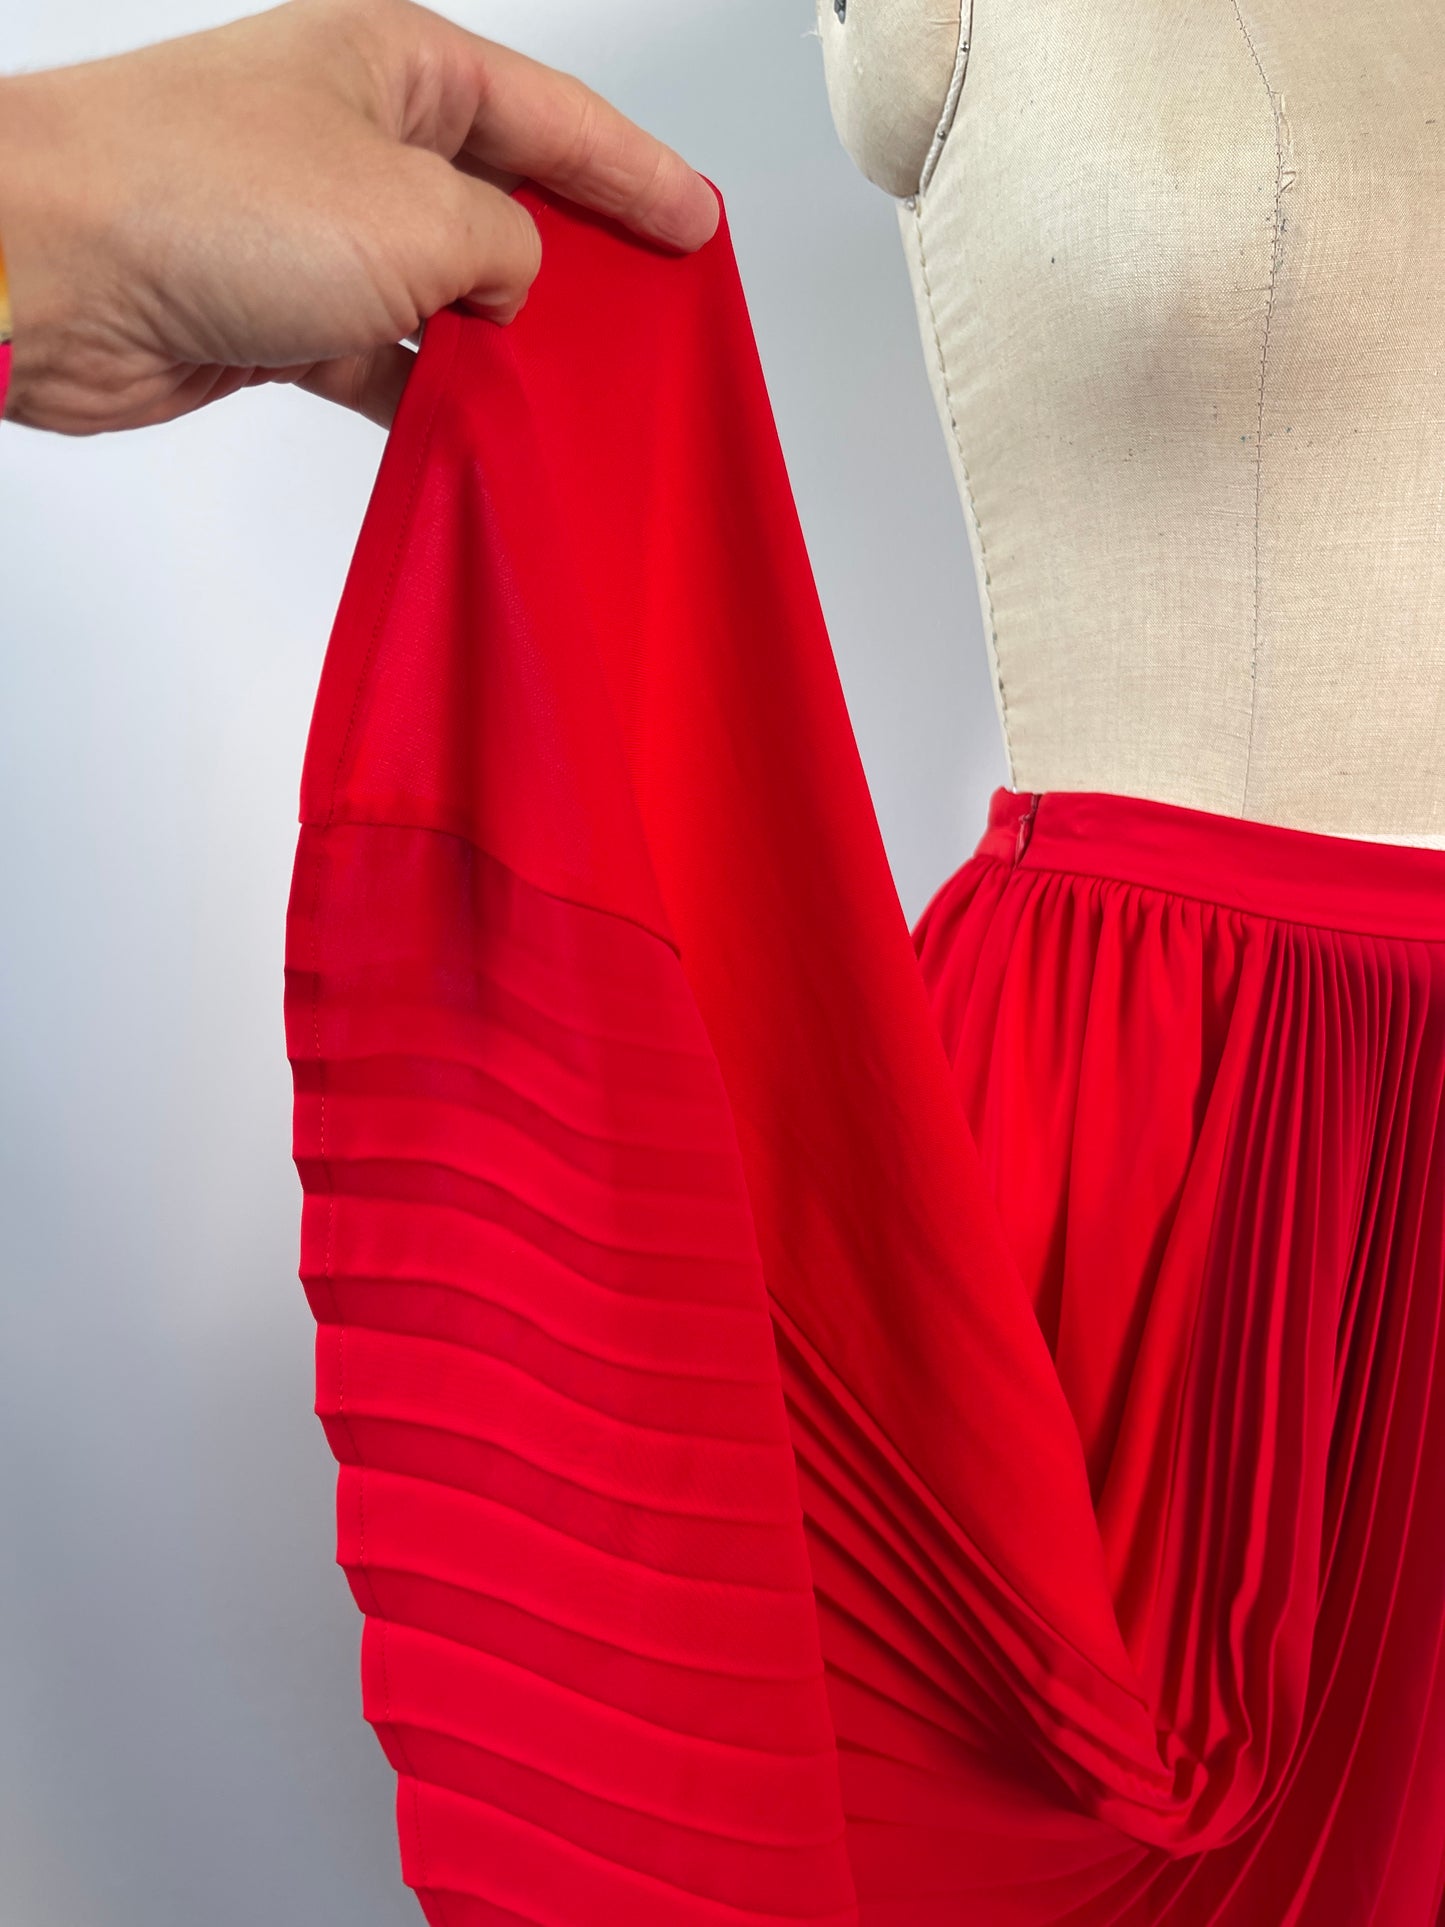 Fabuleuse jupe plissée rouge luxueuse (S)